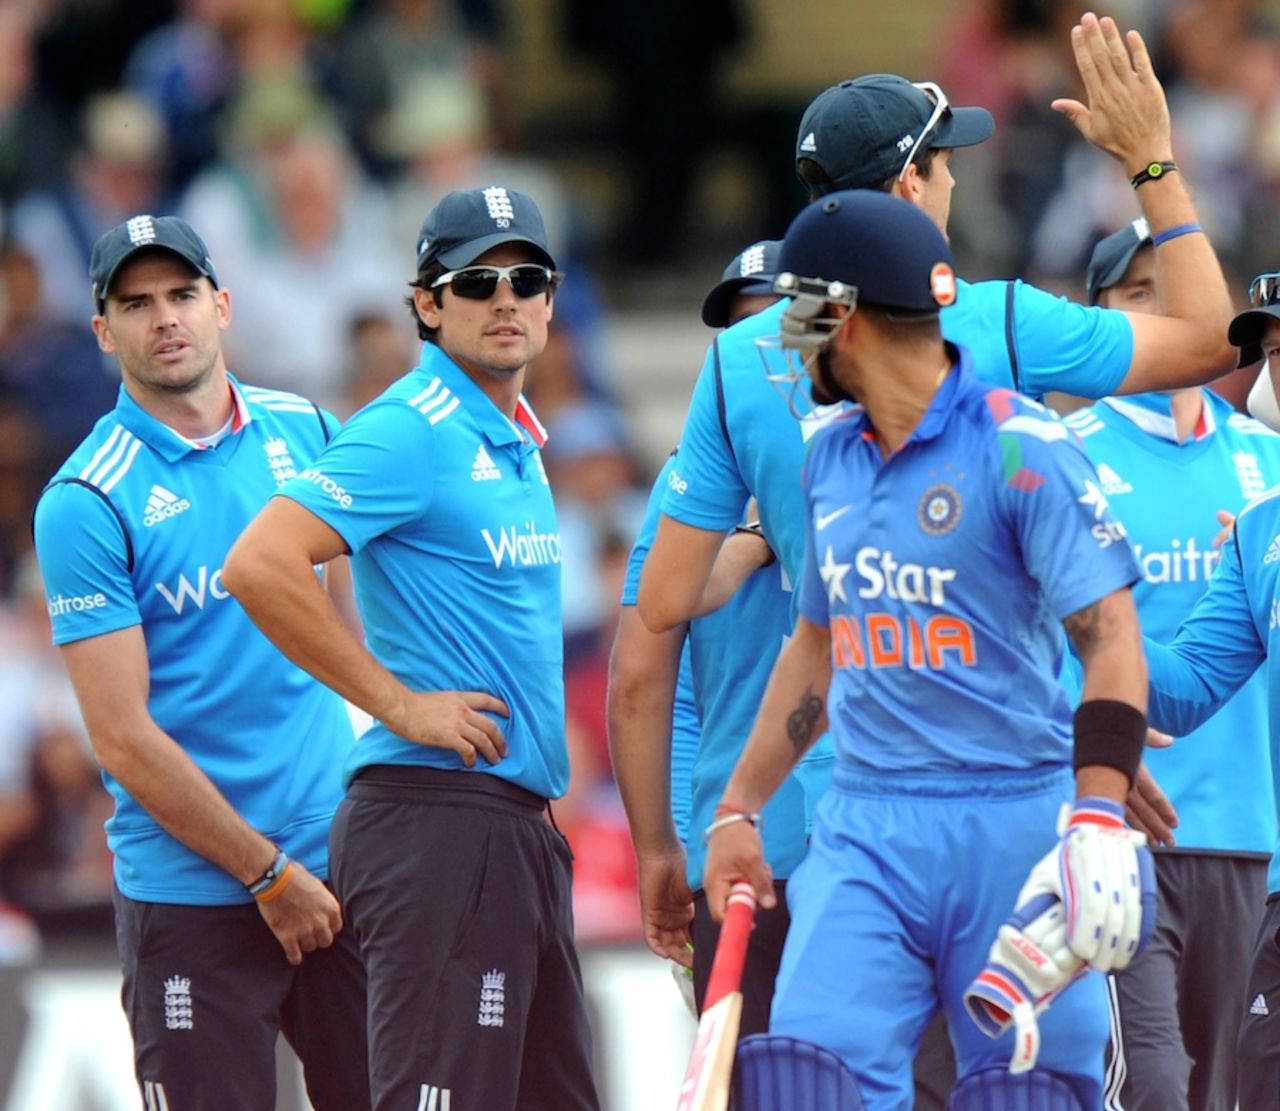 A few heated words were exchanged as Virat Kohli left the field, England v India, 3rd ODI, Trent Bridge, August 30, 2014